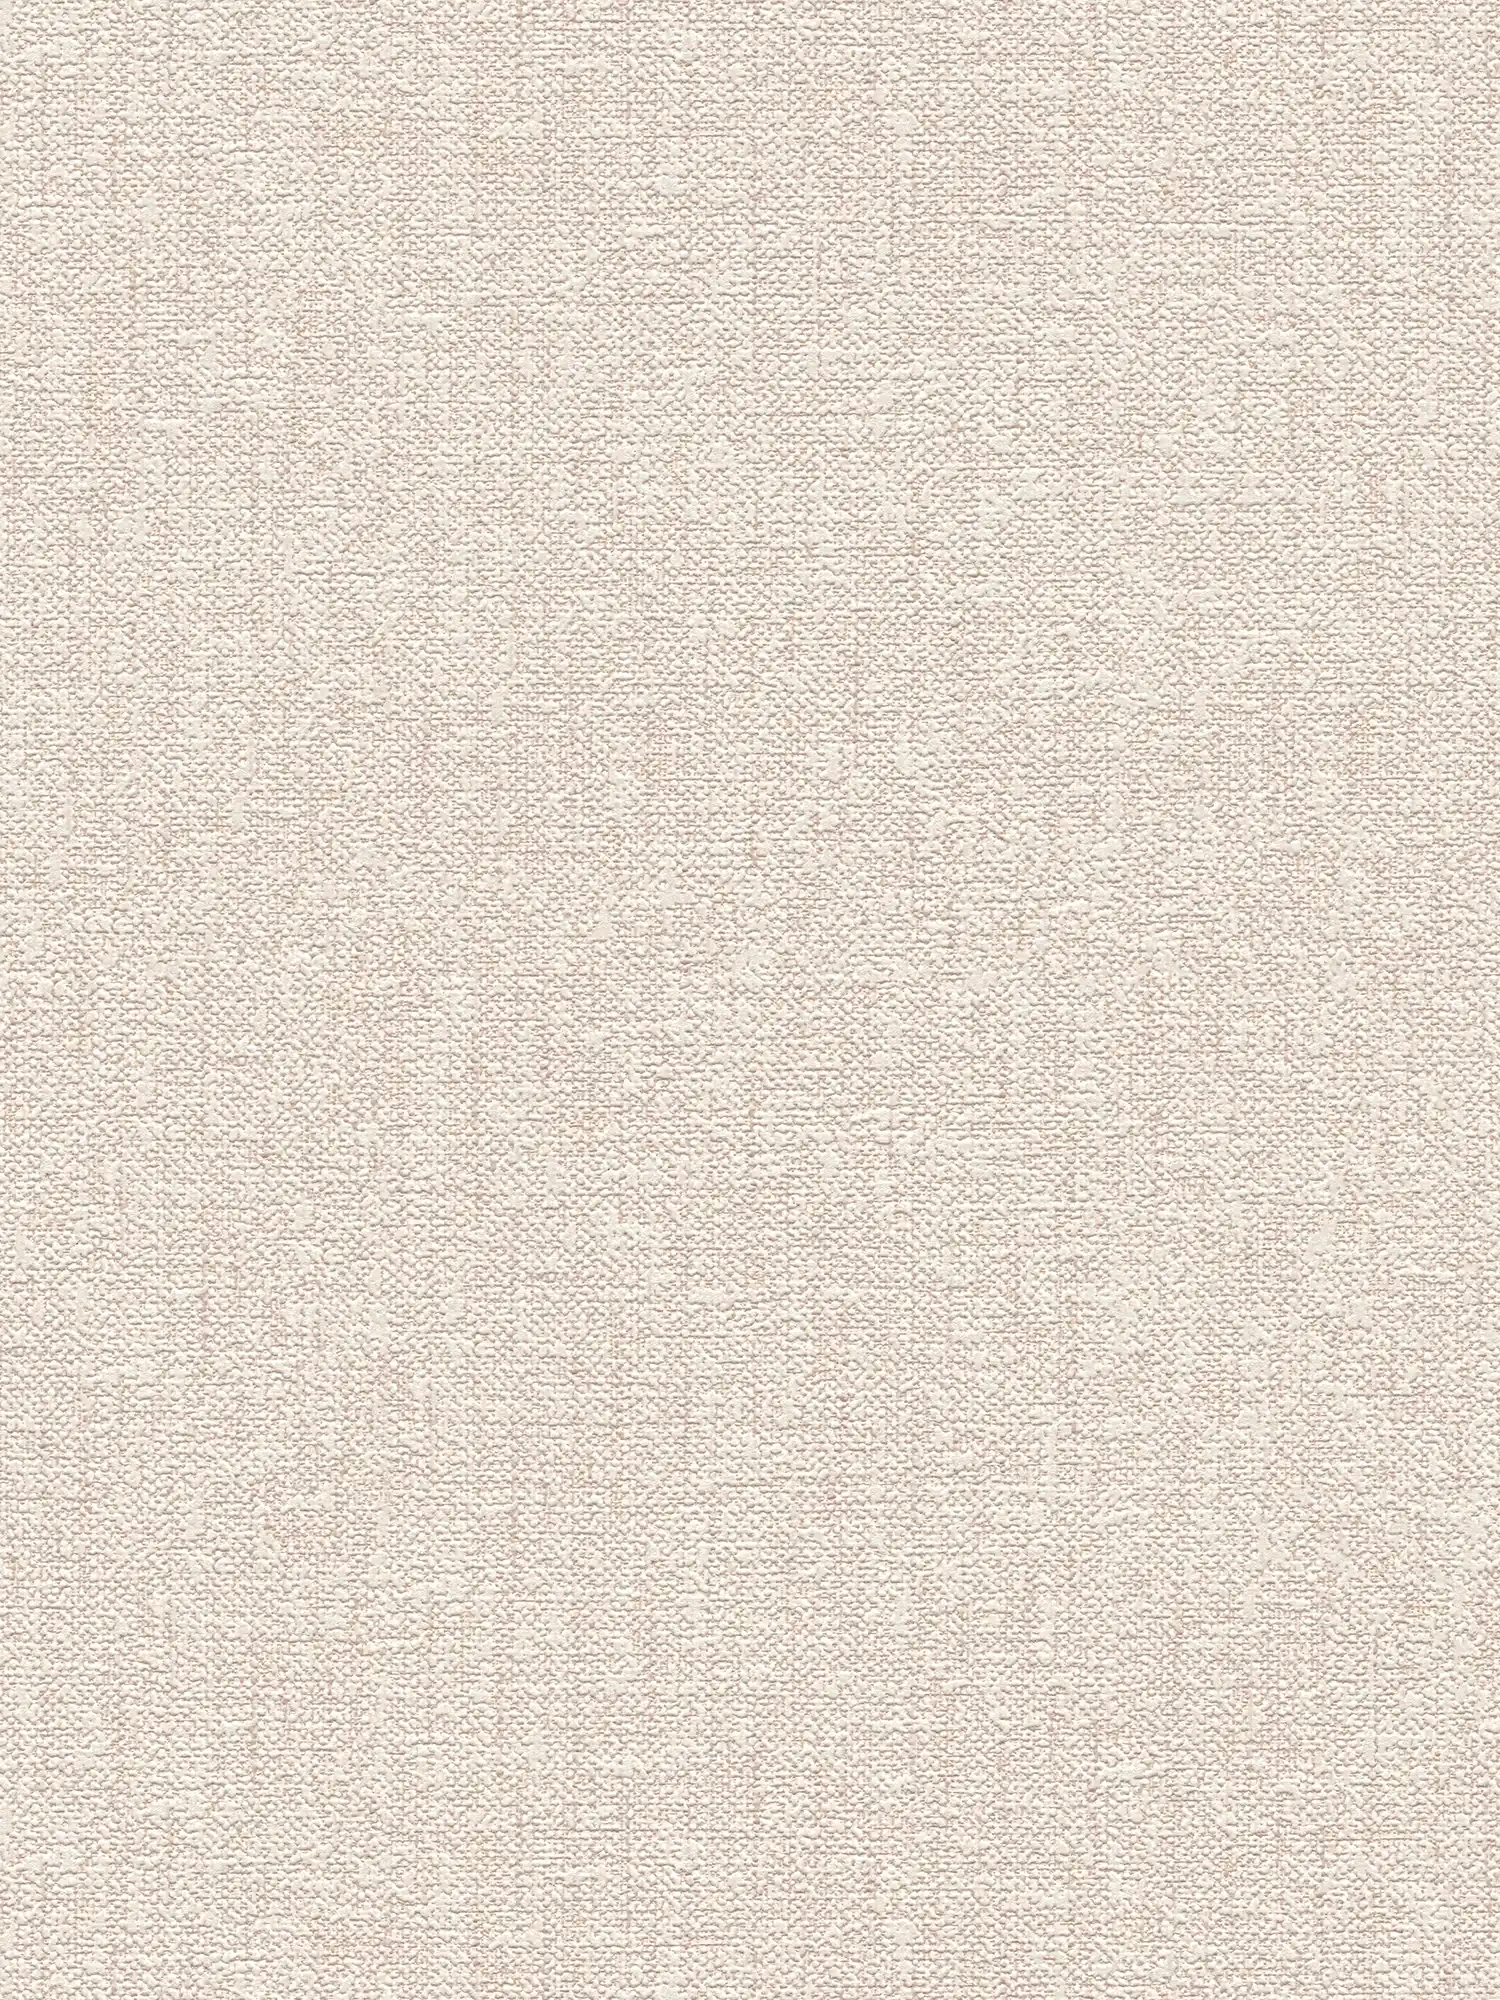 Papel pintado con estructura textil en aspecto de lino - marrón
